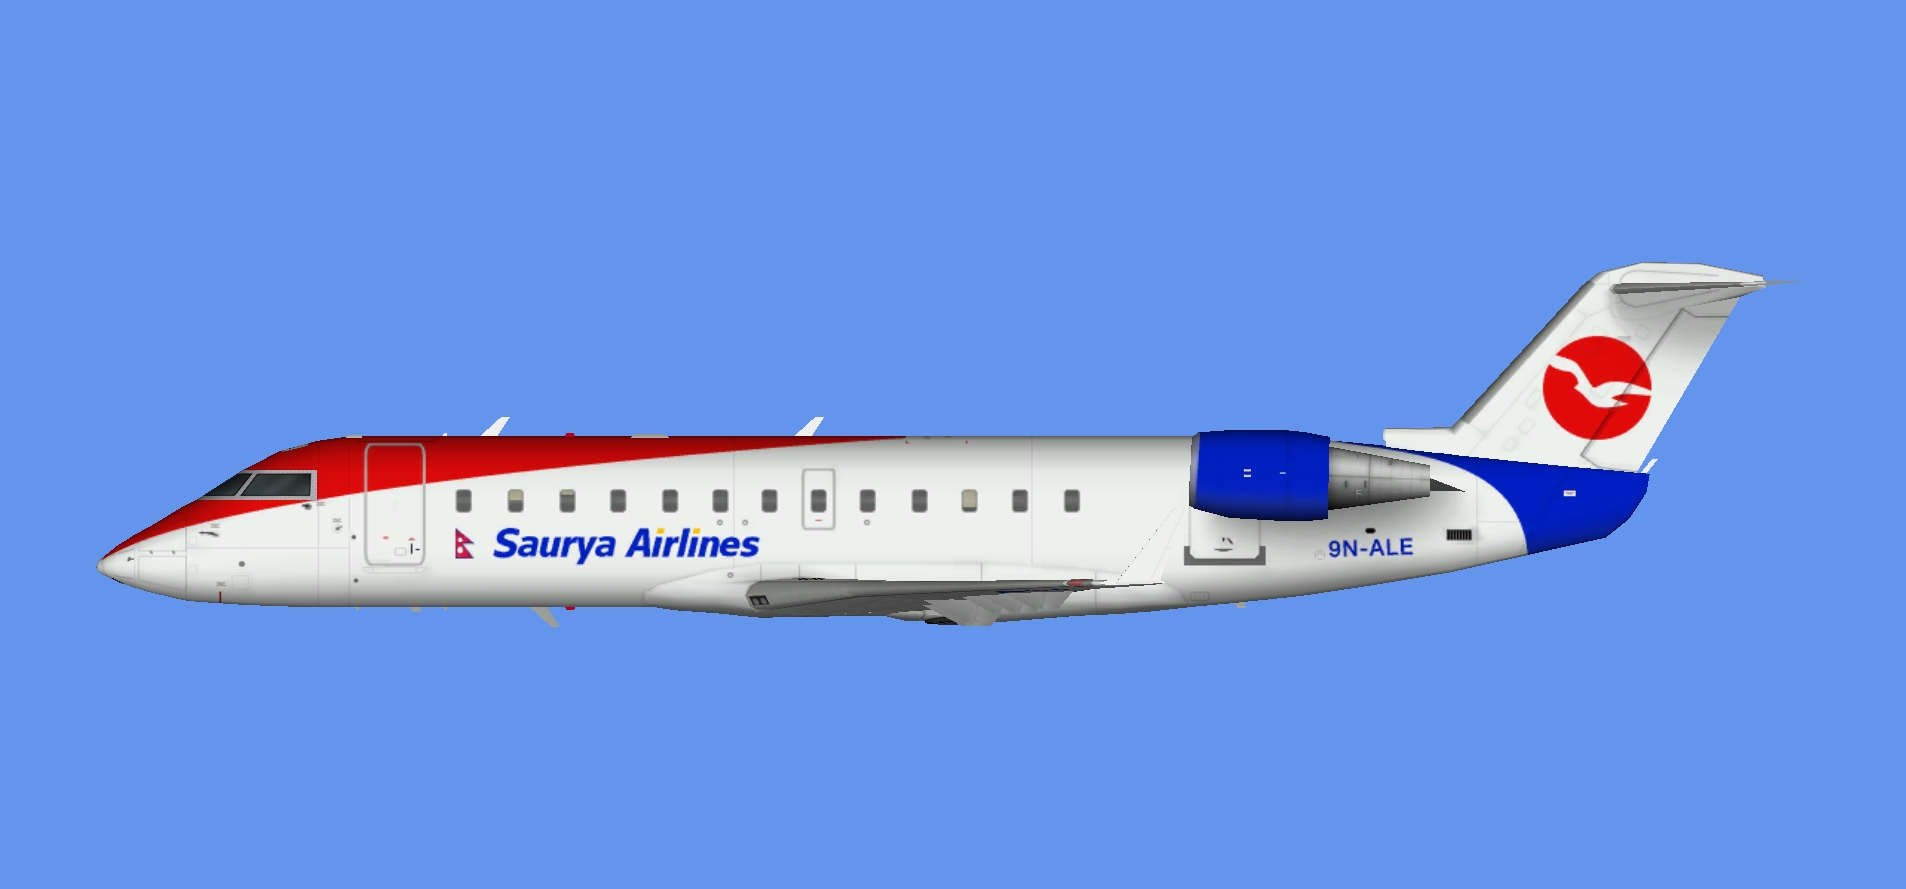 Saurya Airlines CRJ-200